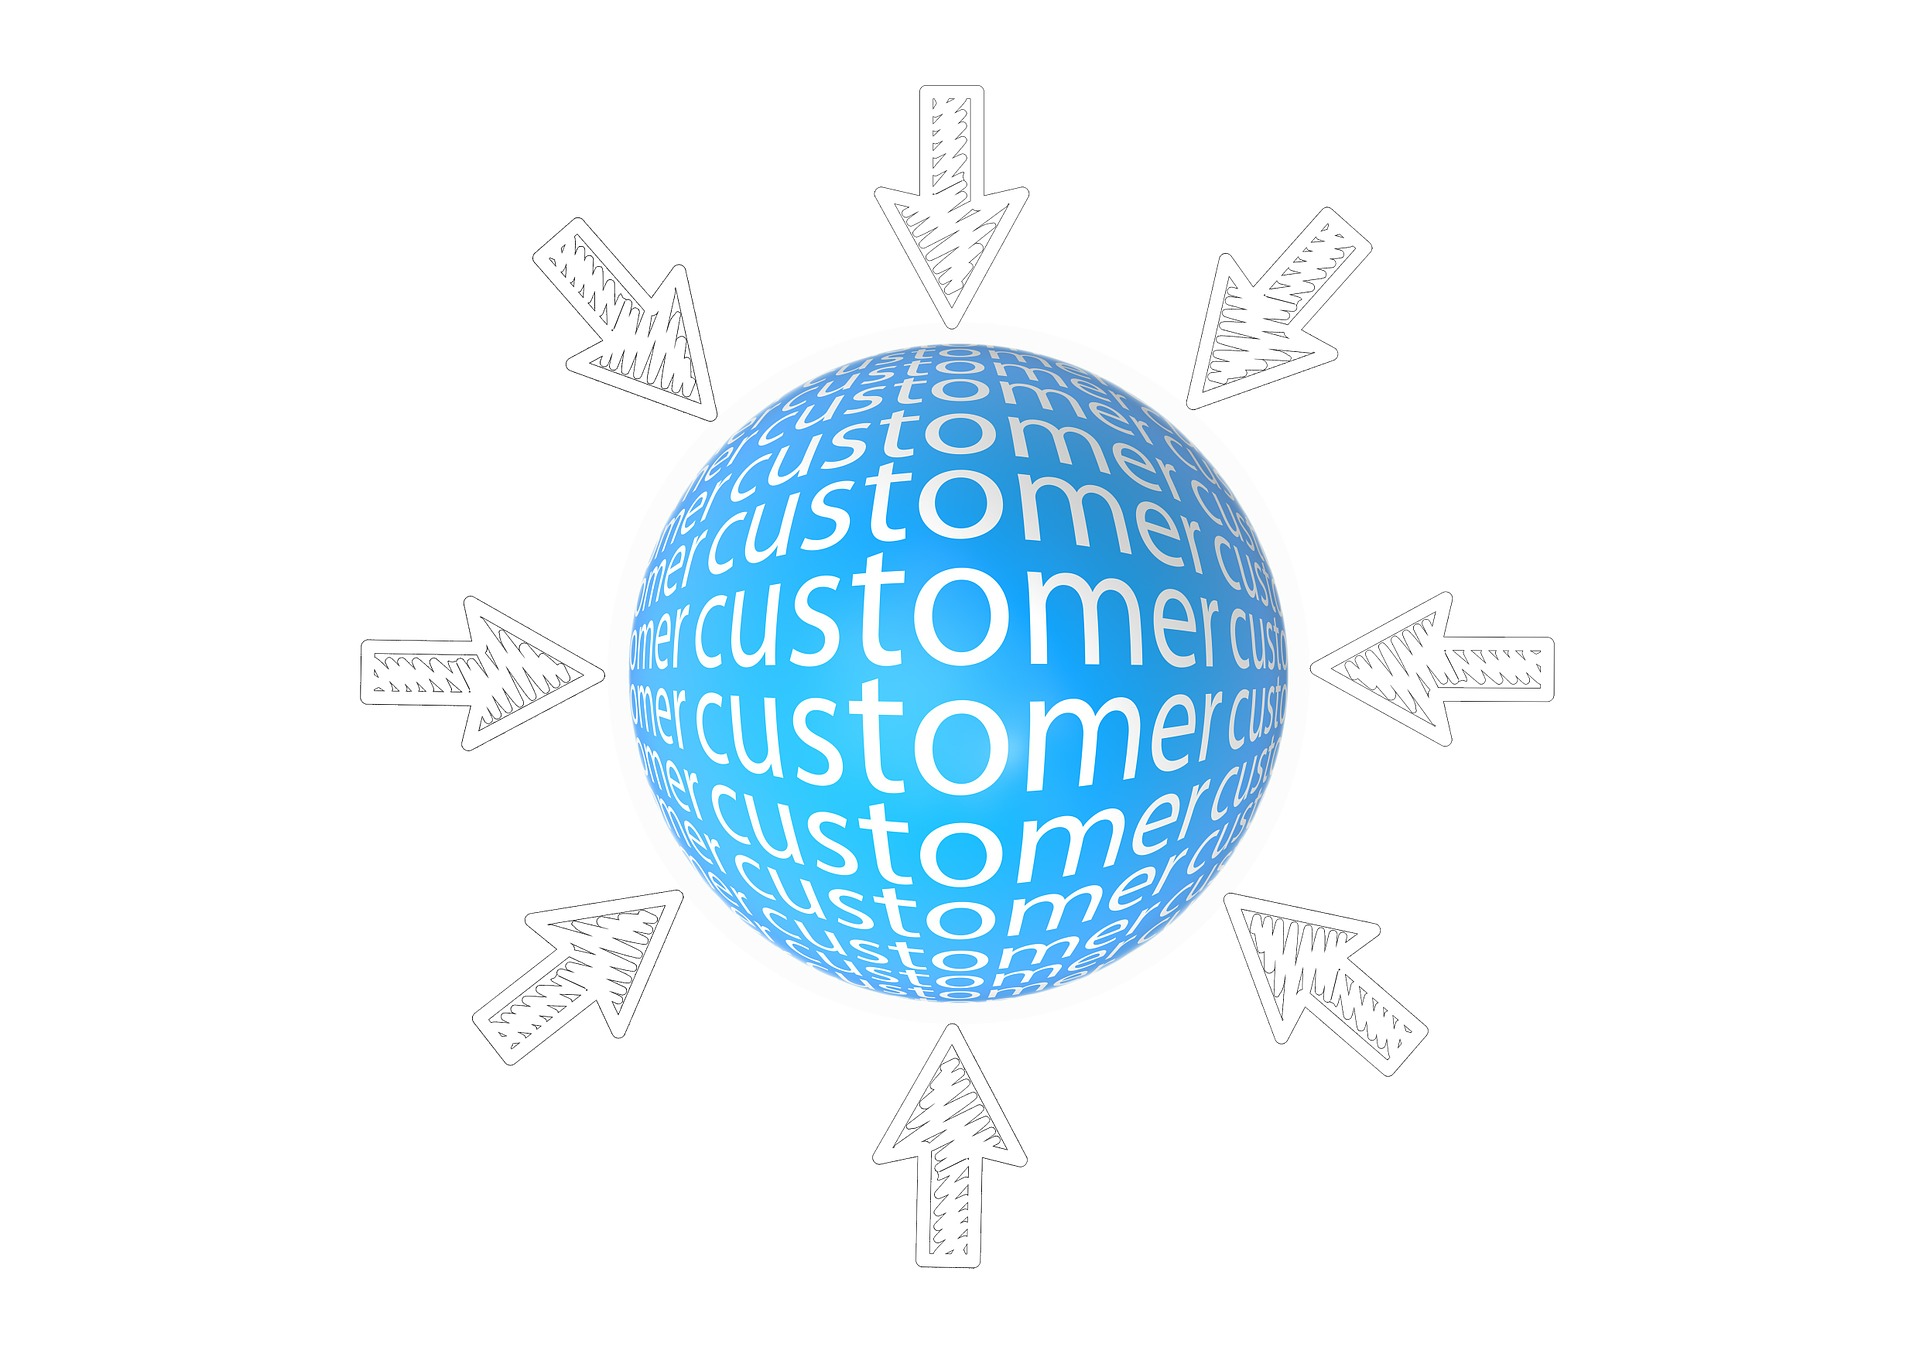 Apply basic skills of customer service